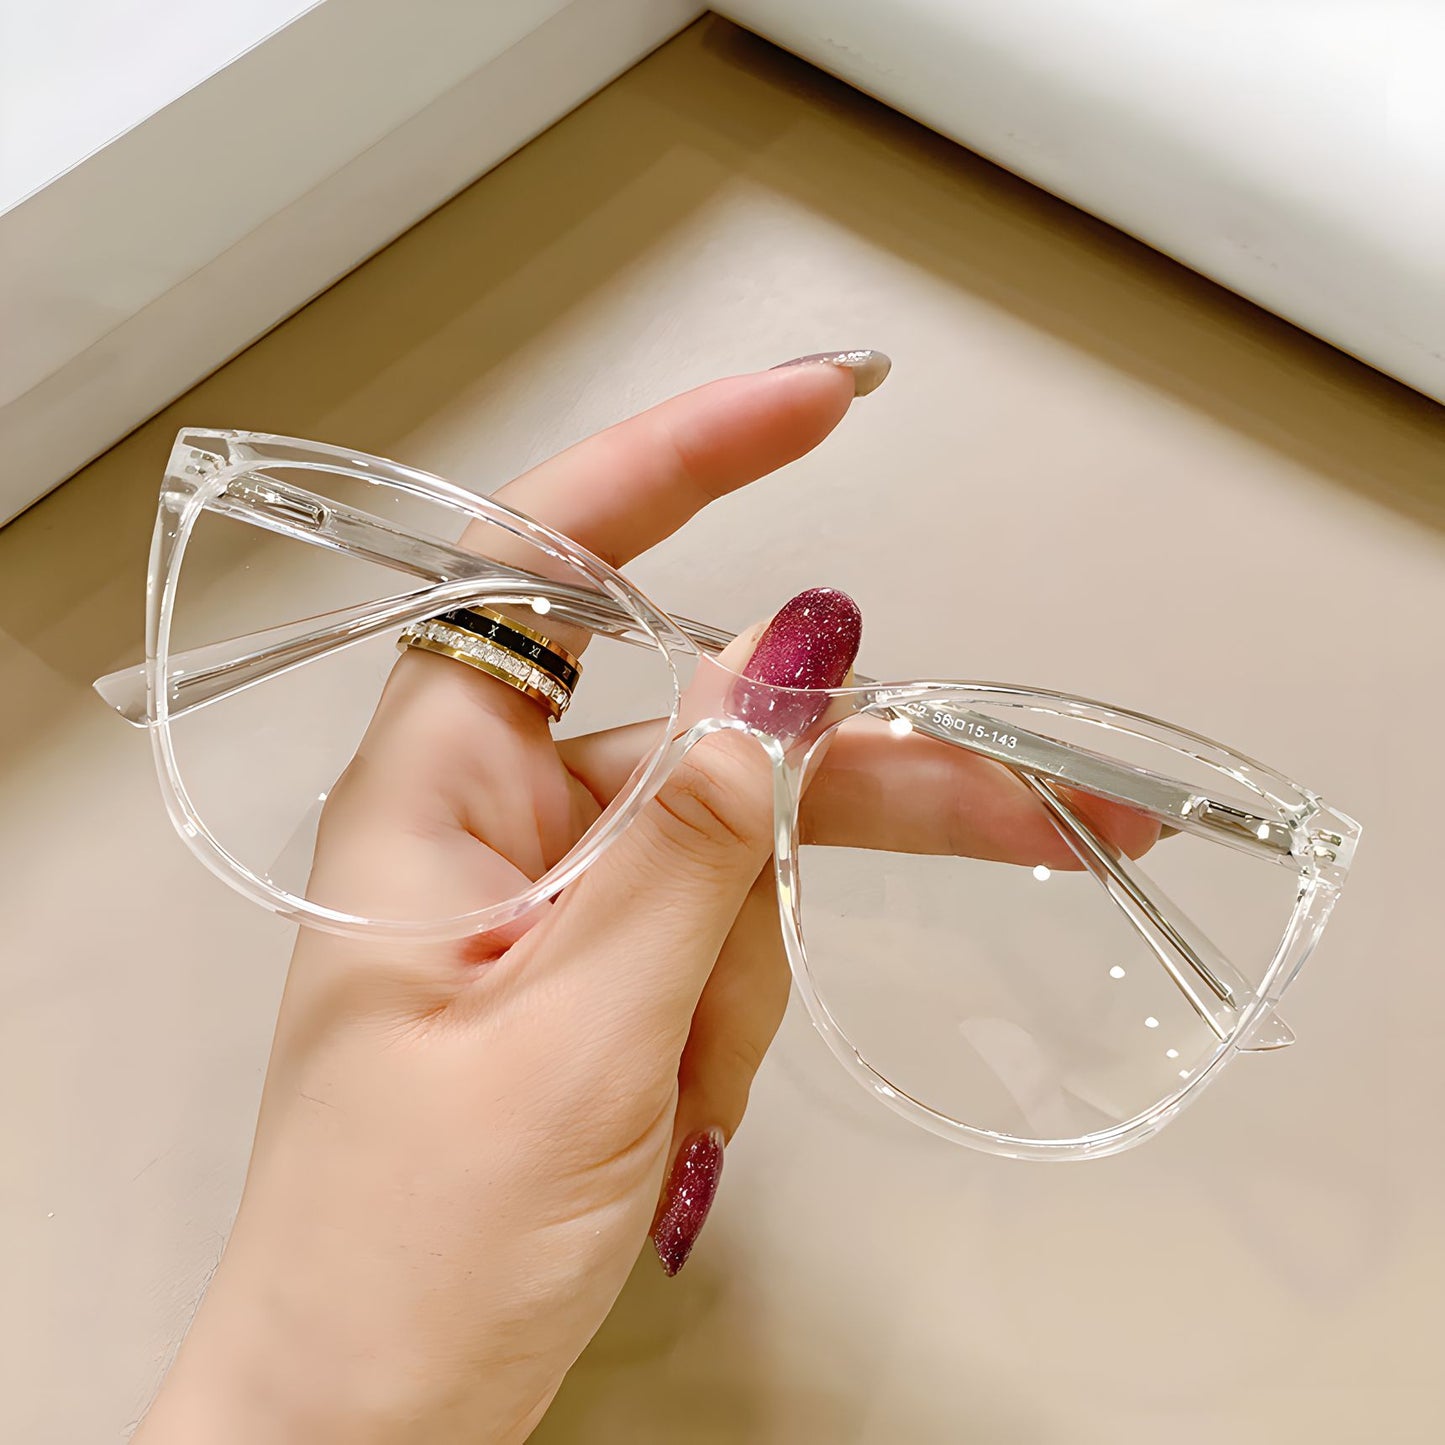 TXOME Cathy Cat Eye Glasses